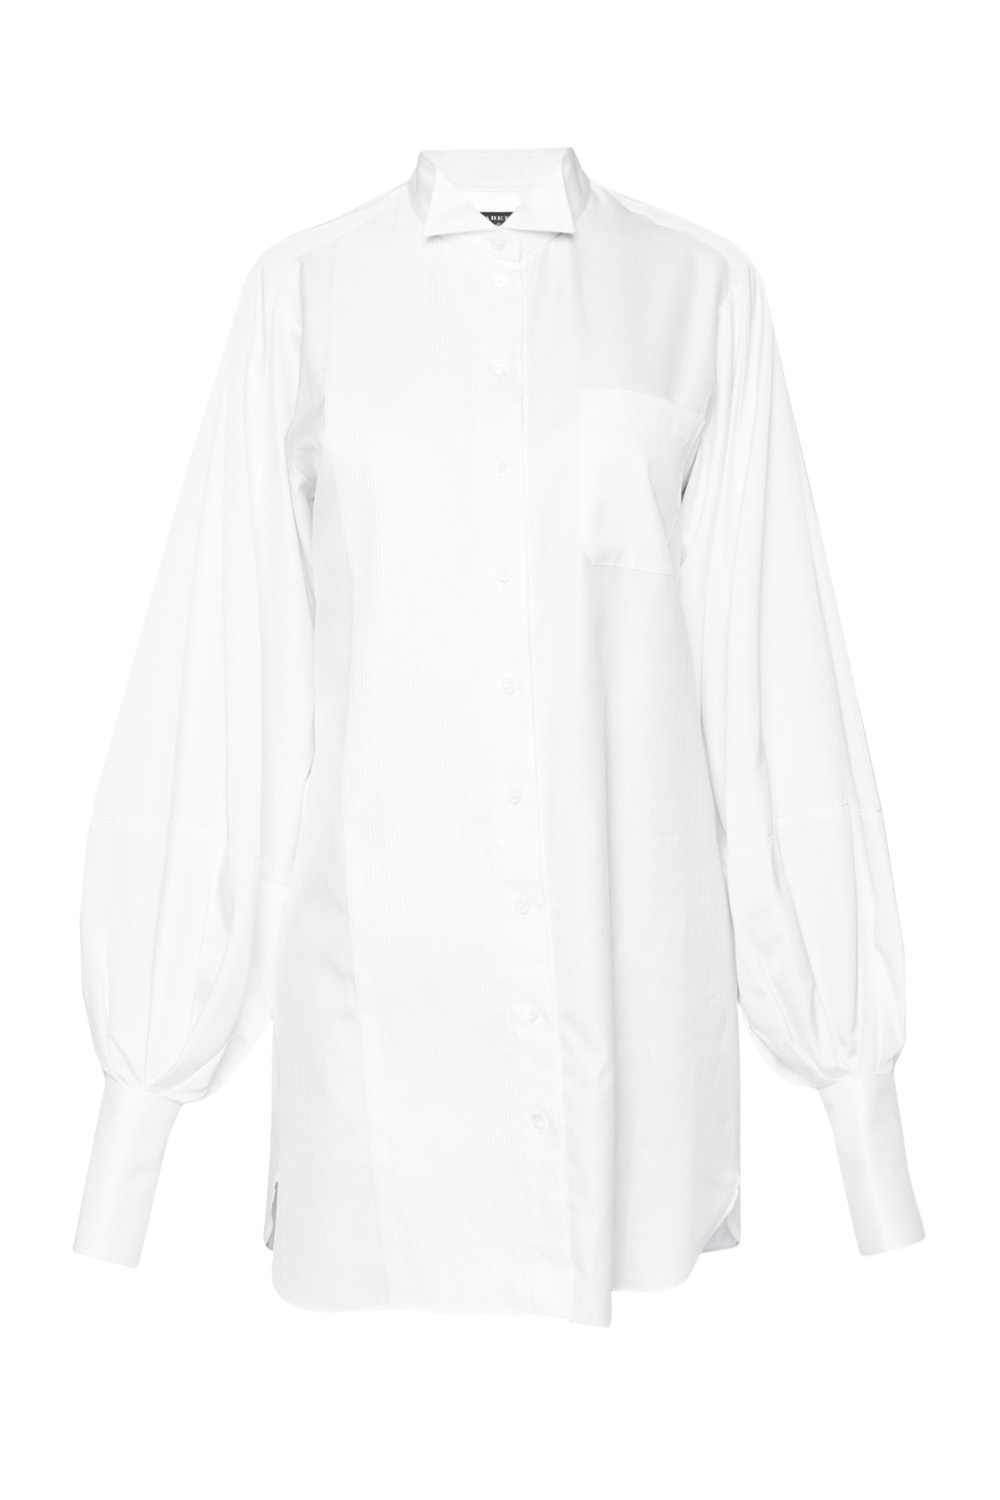 white t shirt dress canada